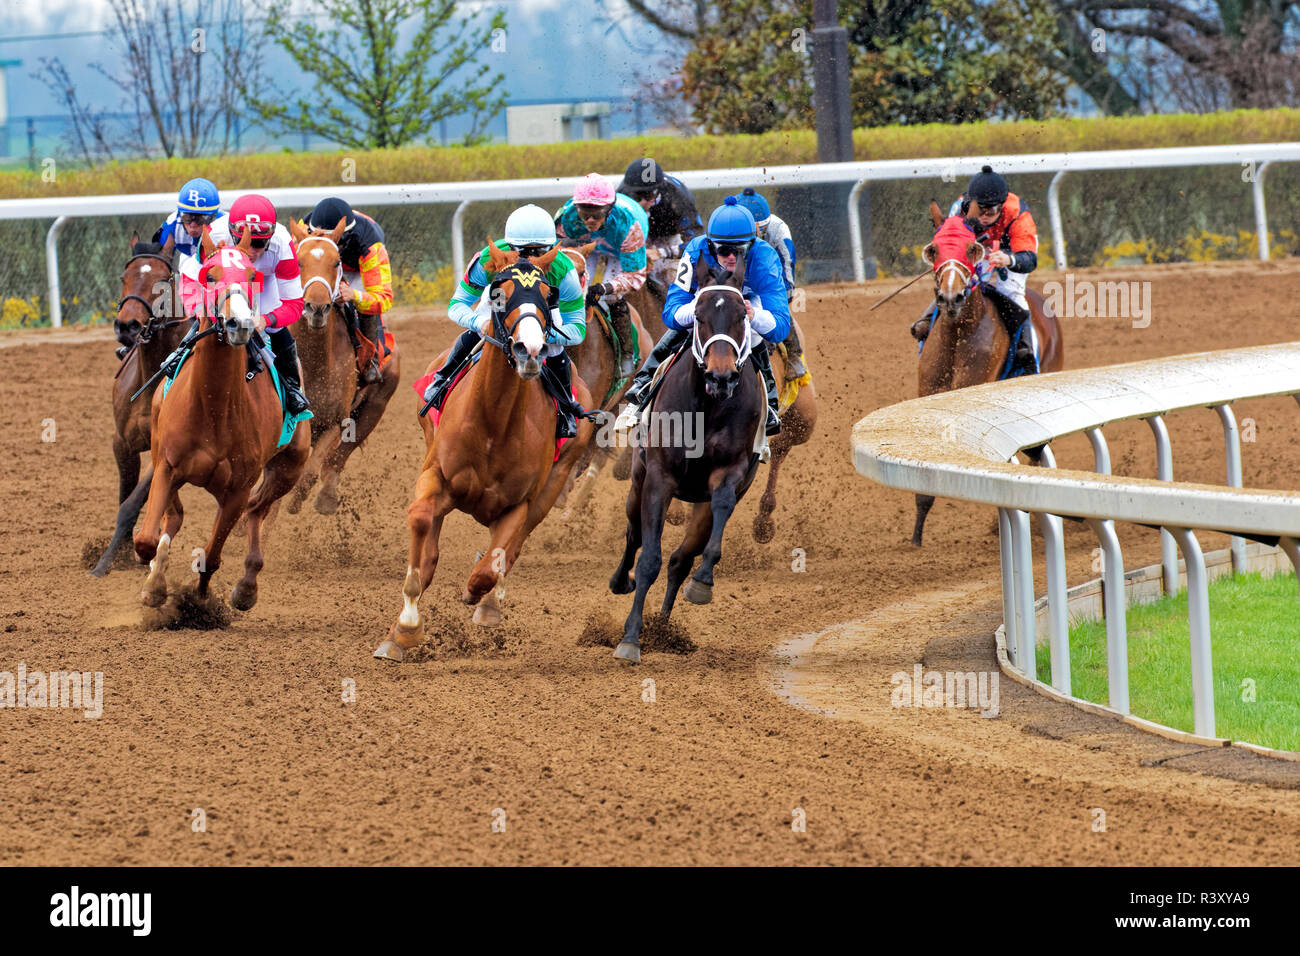 Thoroughbred horse racing, Keeneland Racecourse, Lexington, Kentucky (Editorial Use Only) Stock Photo